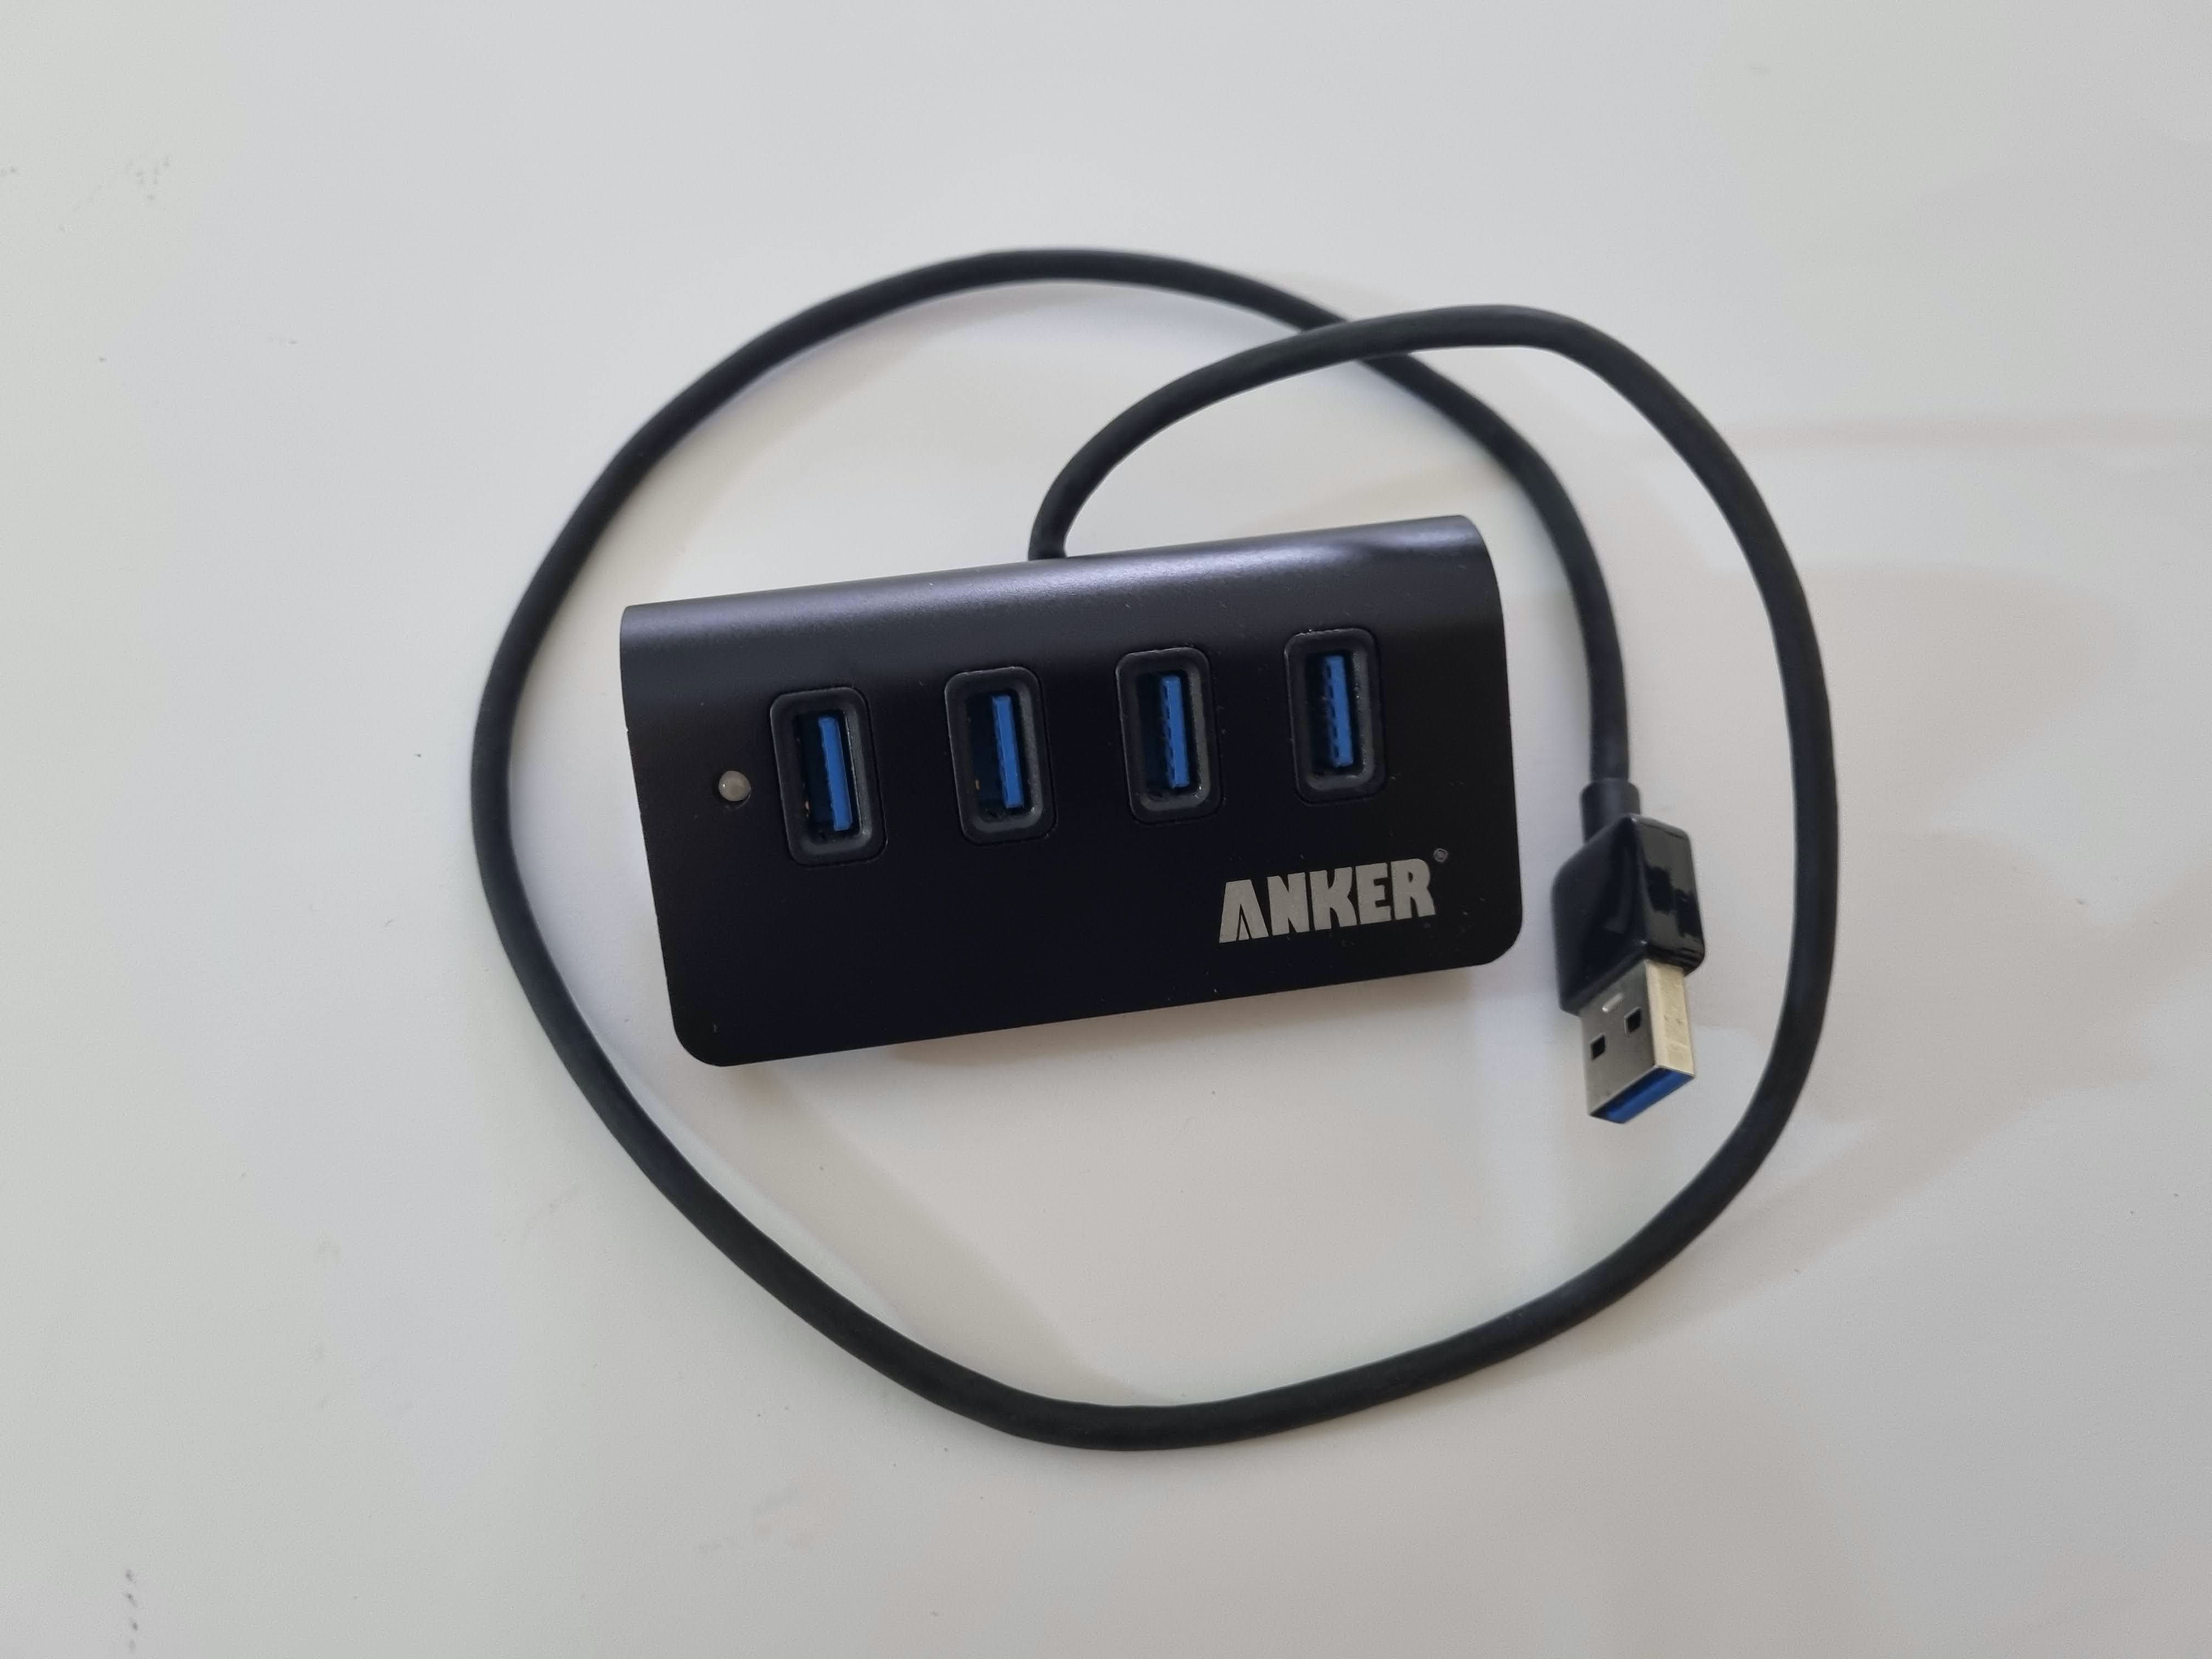 Hub USB 3.0 da marca Anker com 4 portas